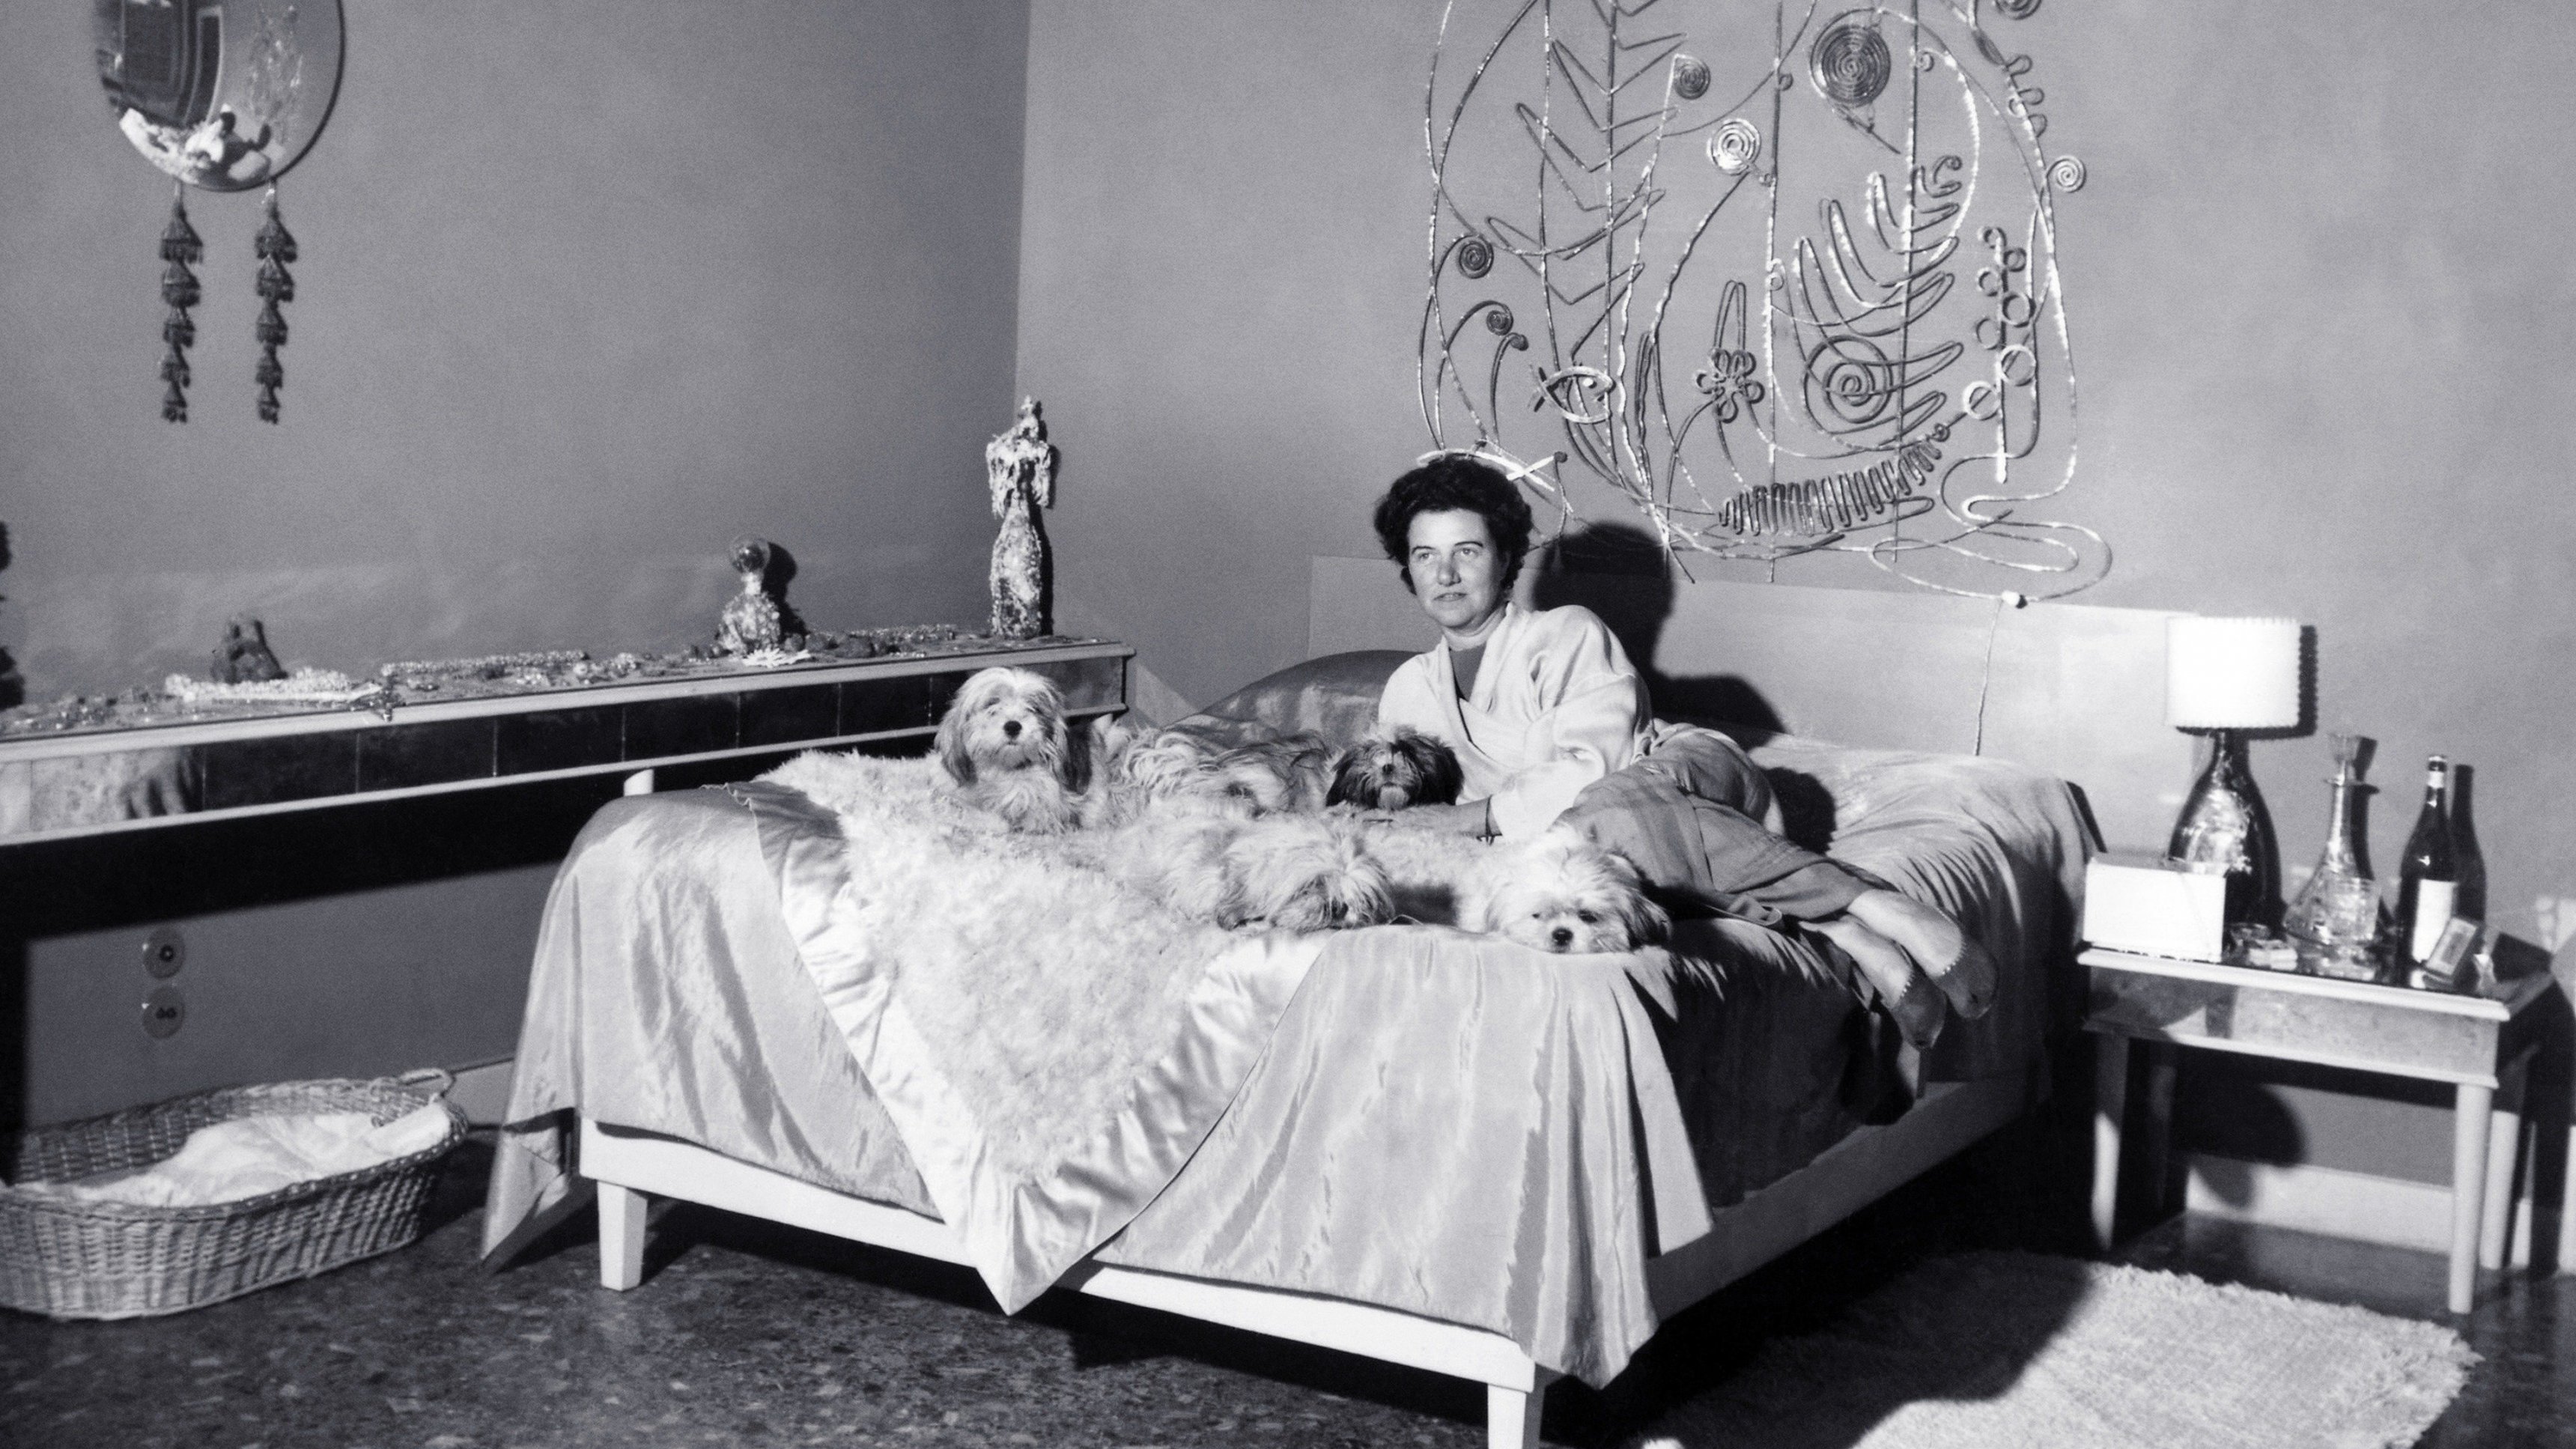 Peggy Guggenheim: Art Addict